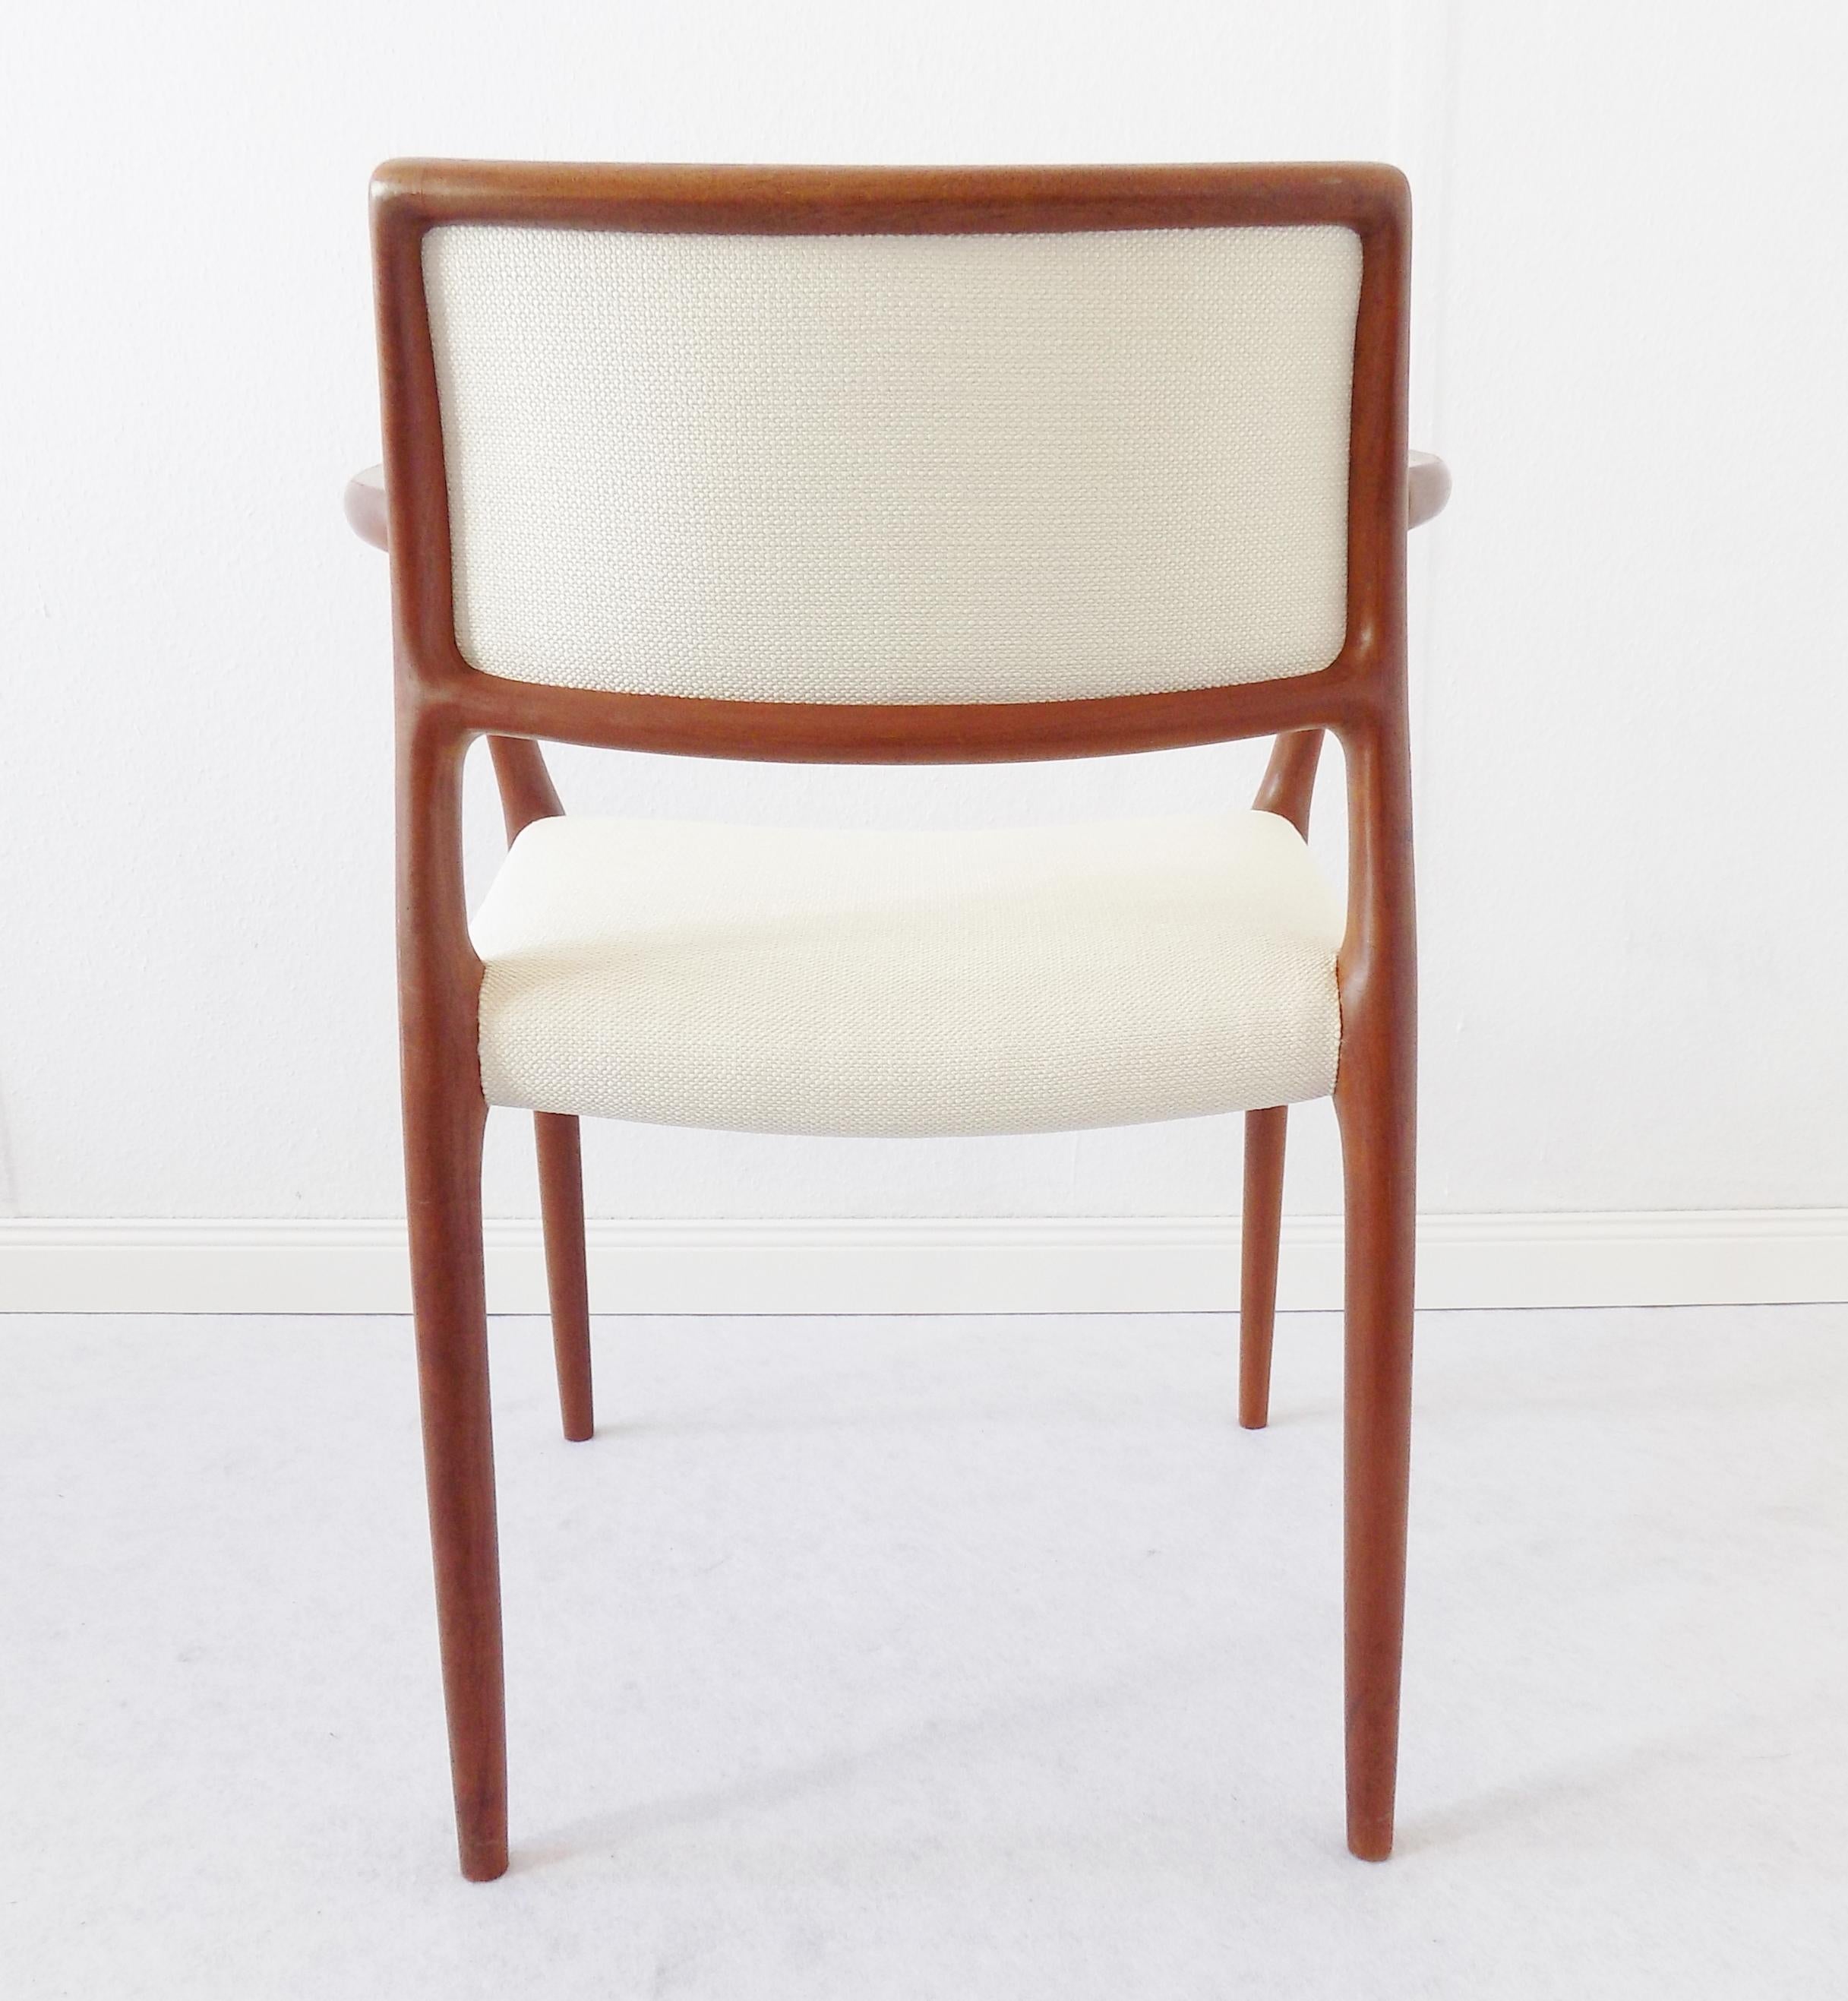 Niels Möller Model 65 Lounge Chair, Danish Teak Scandinavian modern, upholstered For Sale 1